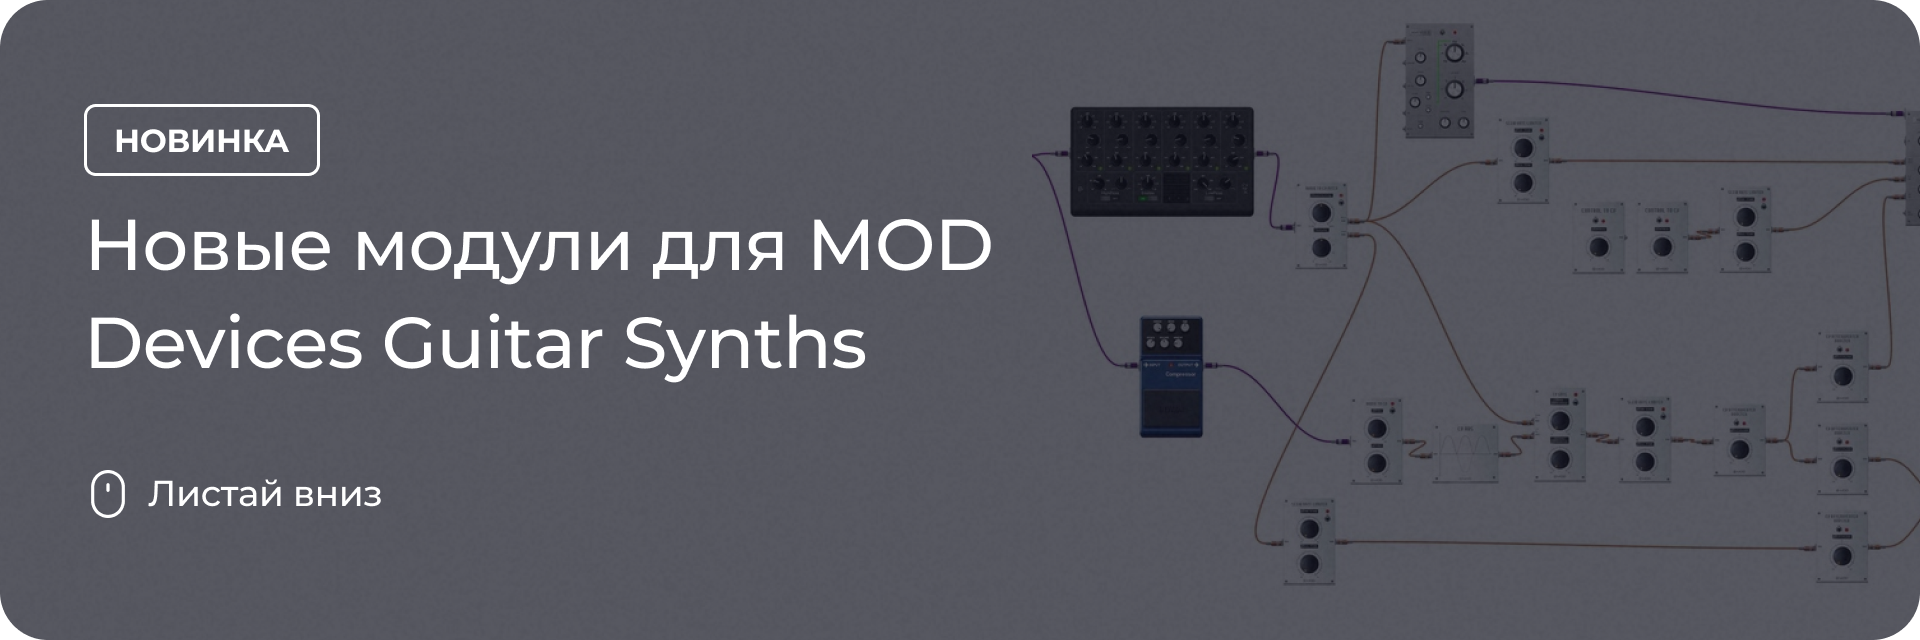 Новые модули для MOD Devices Guitar Synths